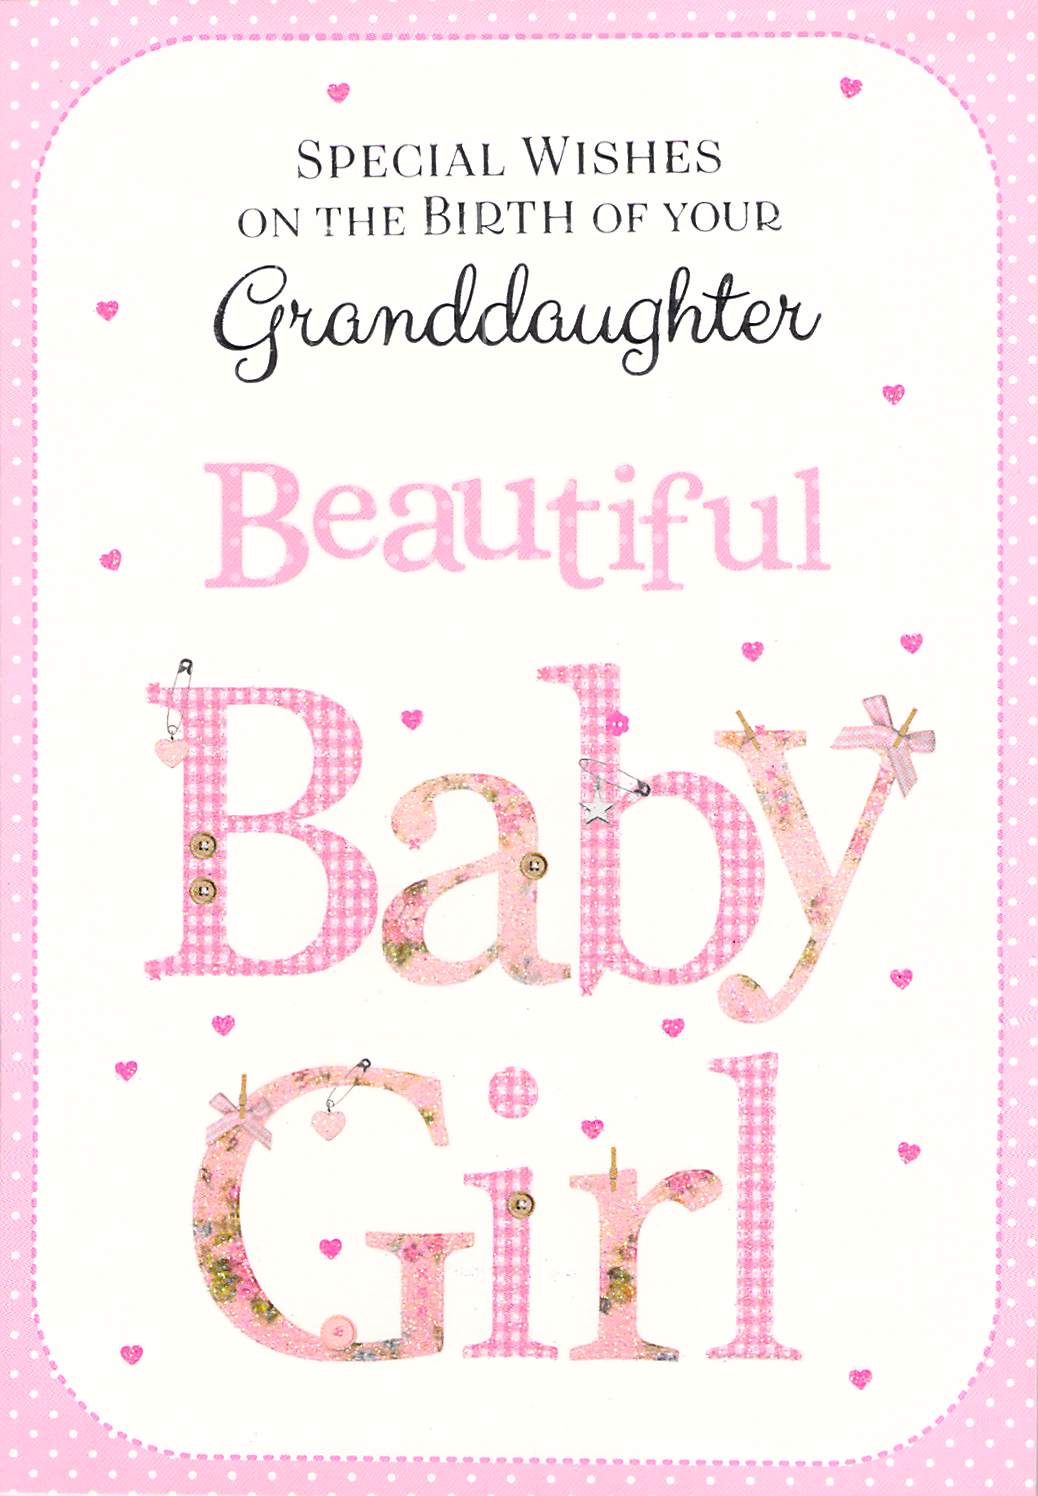 Birth (Granddaughter) - Greeting Card - Multi Buy - Free P&P